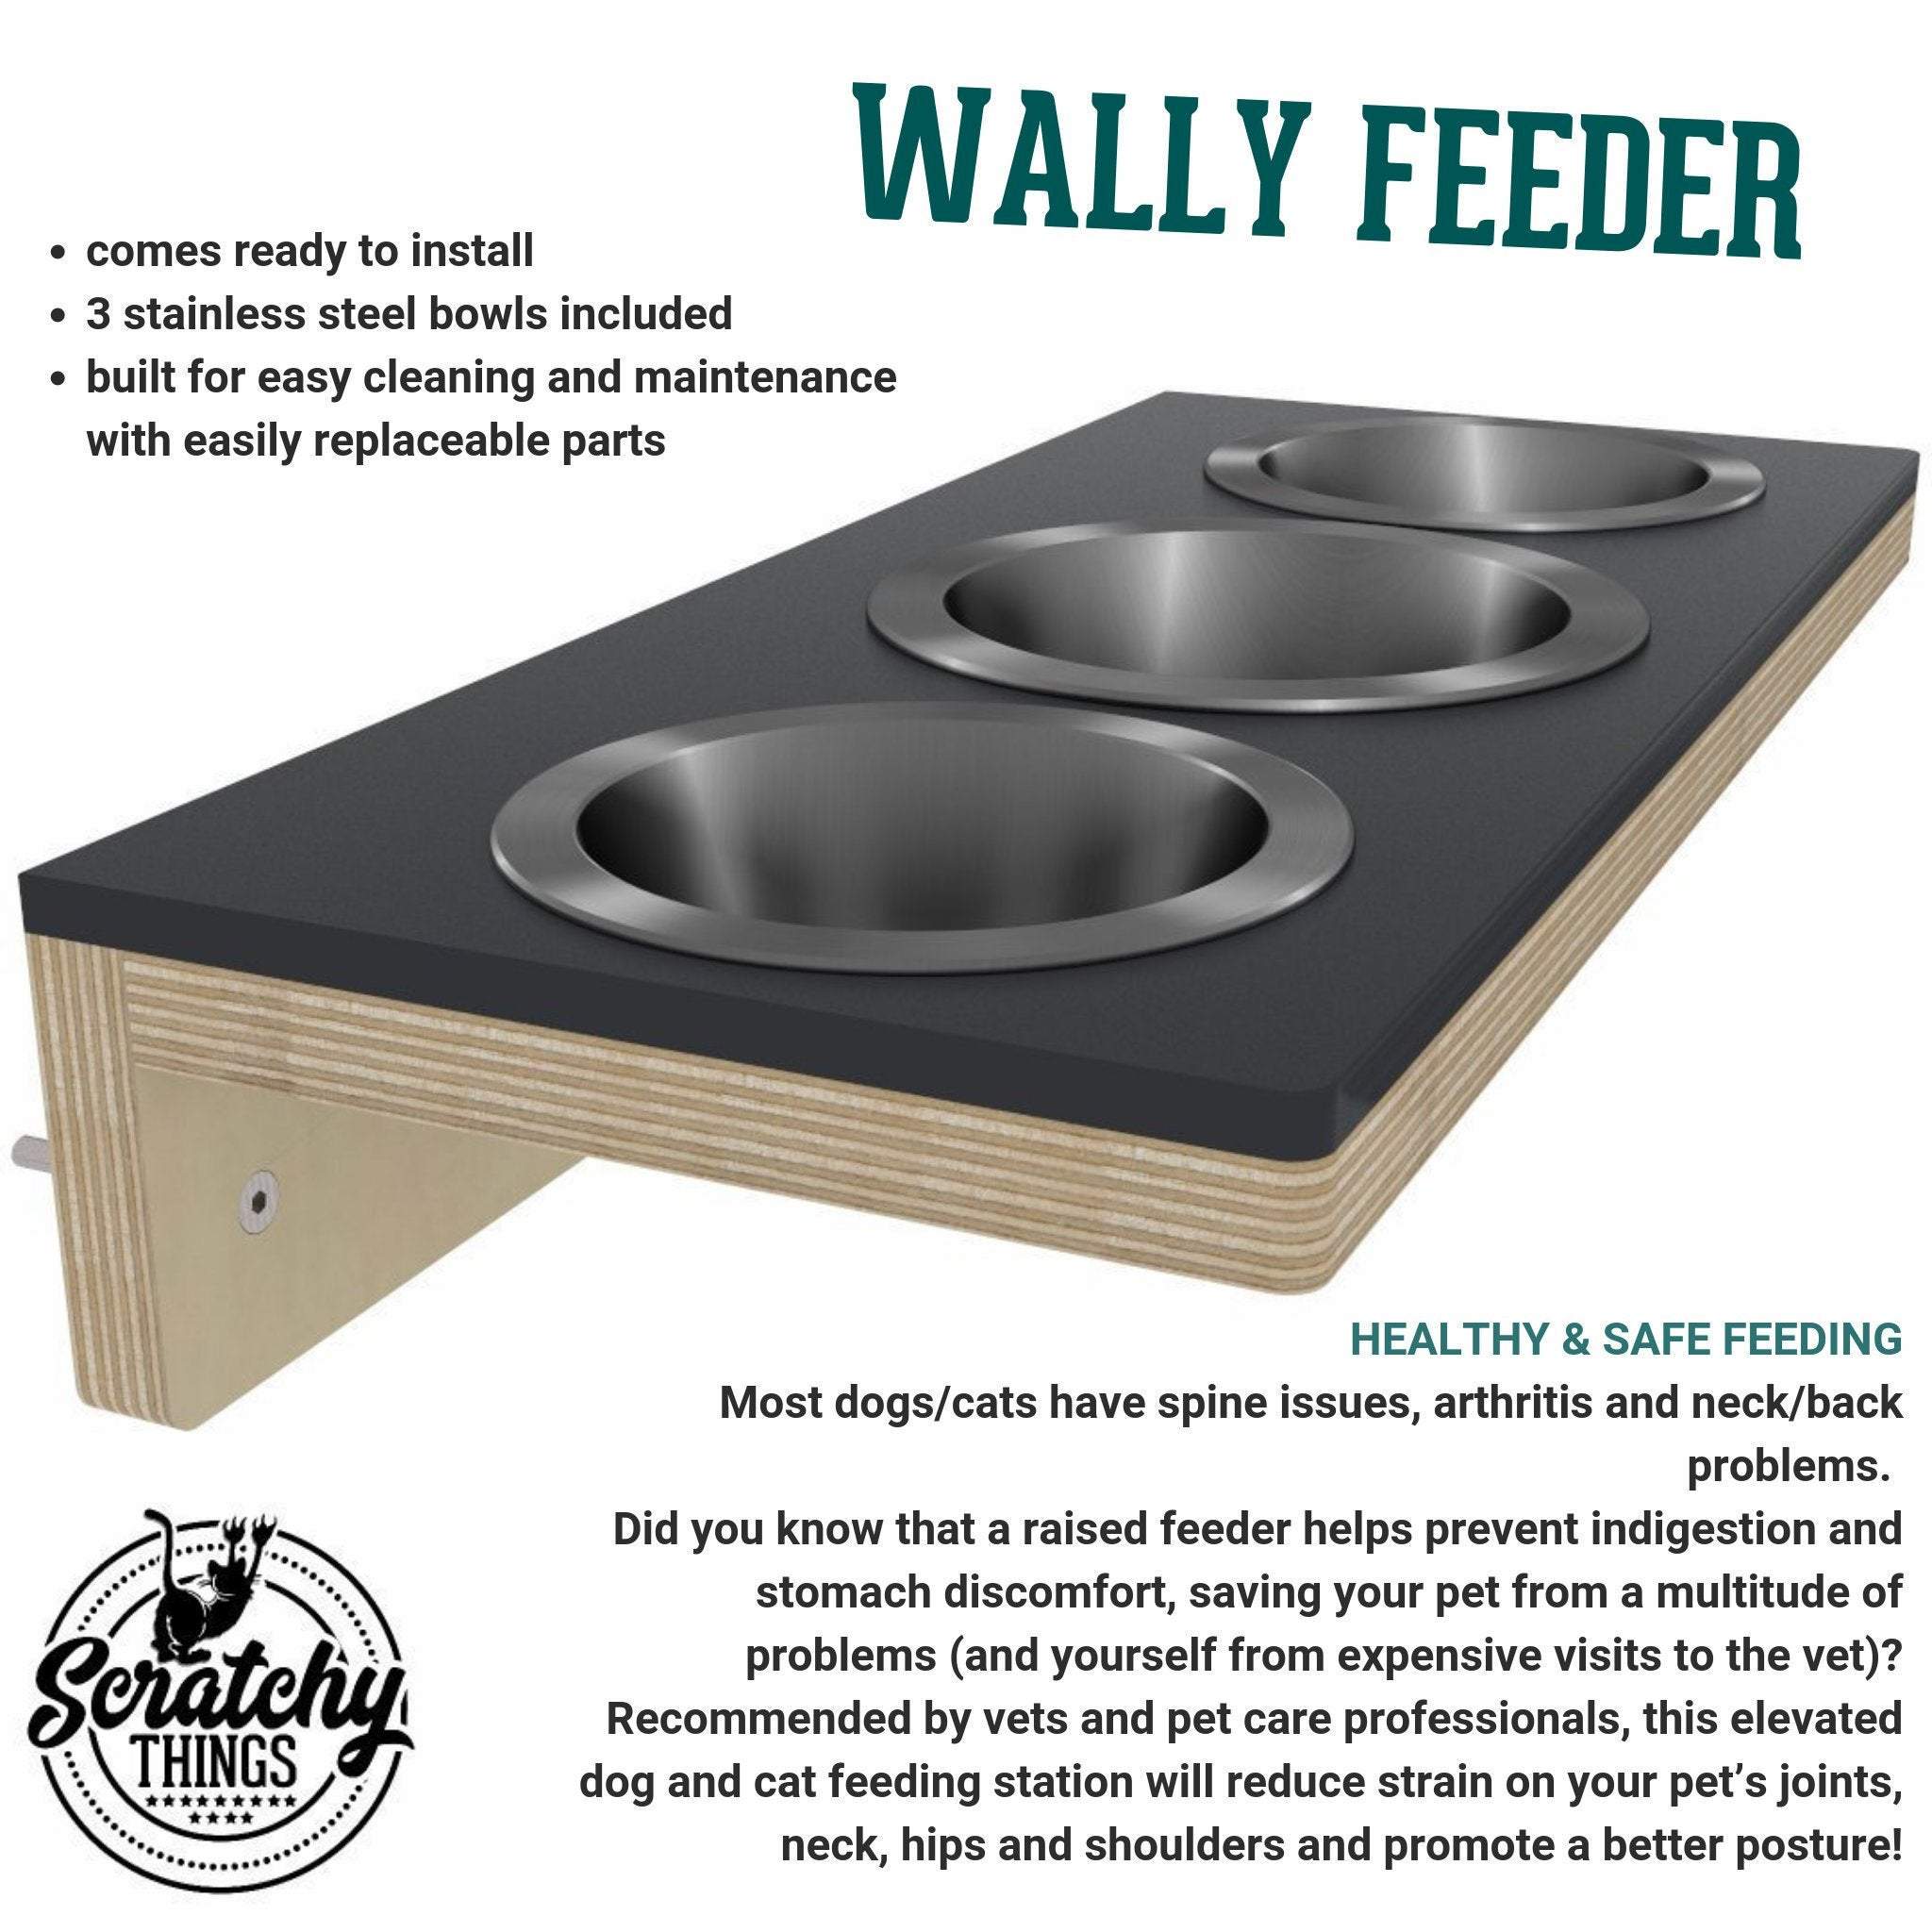 Cat Wall Shelf Feeder - Wally Feeder - Scratchy Things Premium Pet Furniture